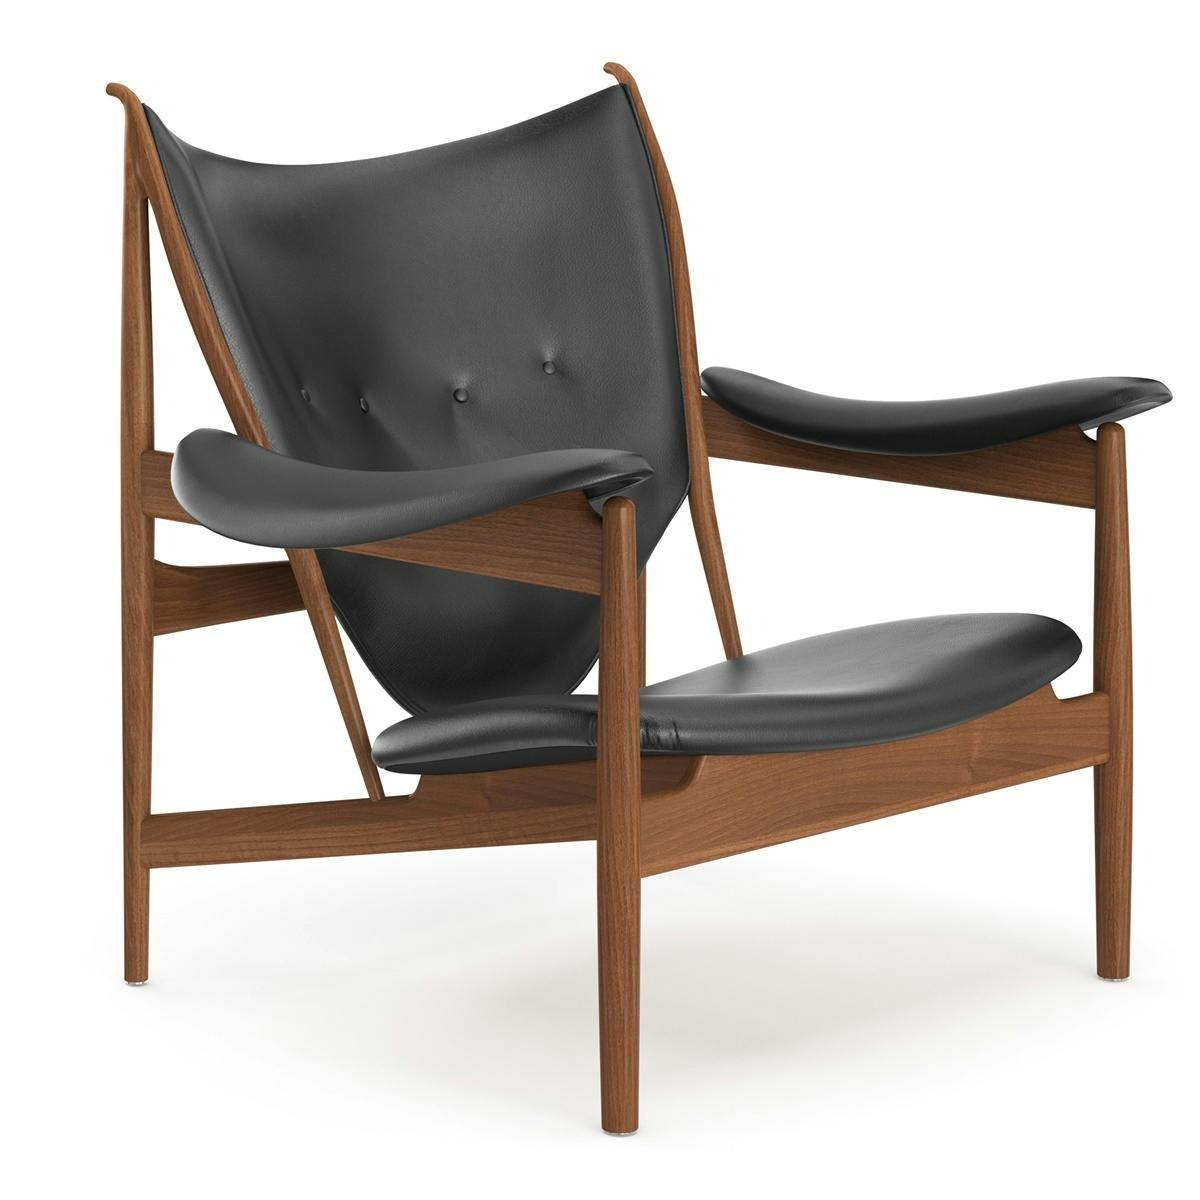 Marcel Breuer diseñó la silla Wassily en 1925.